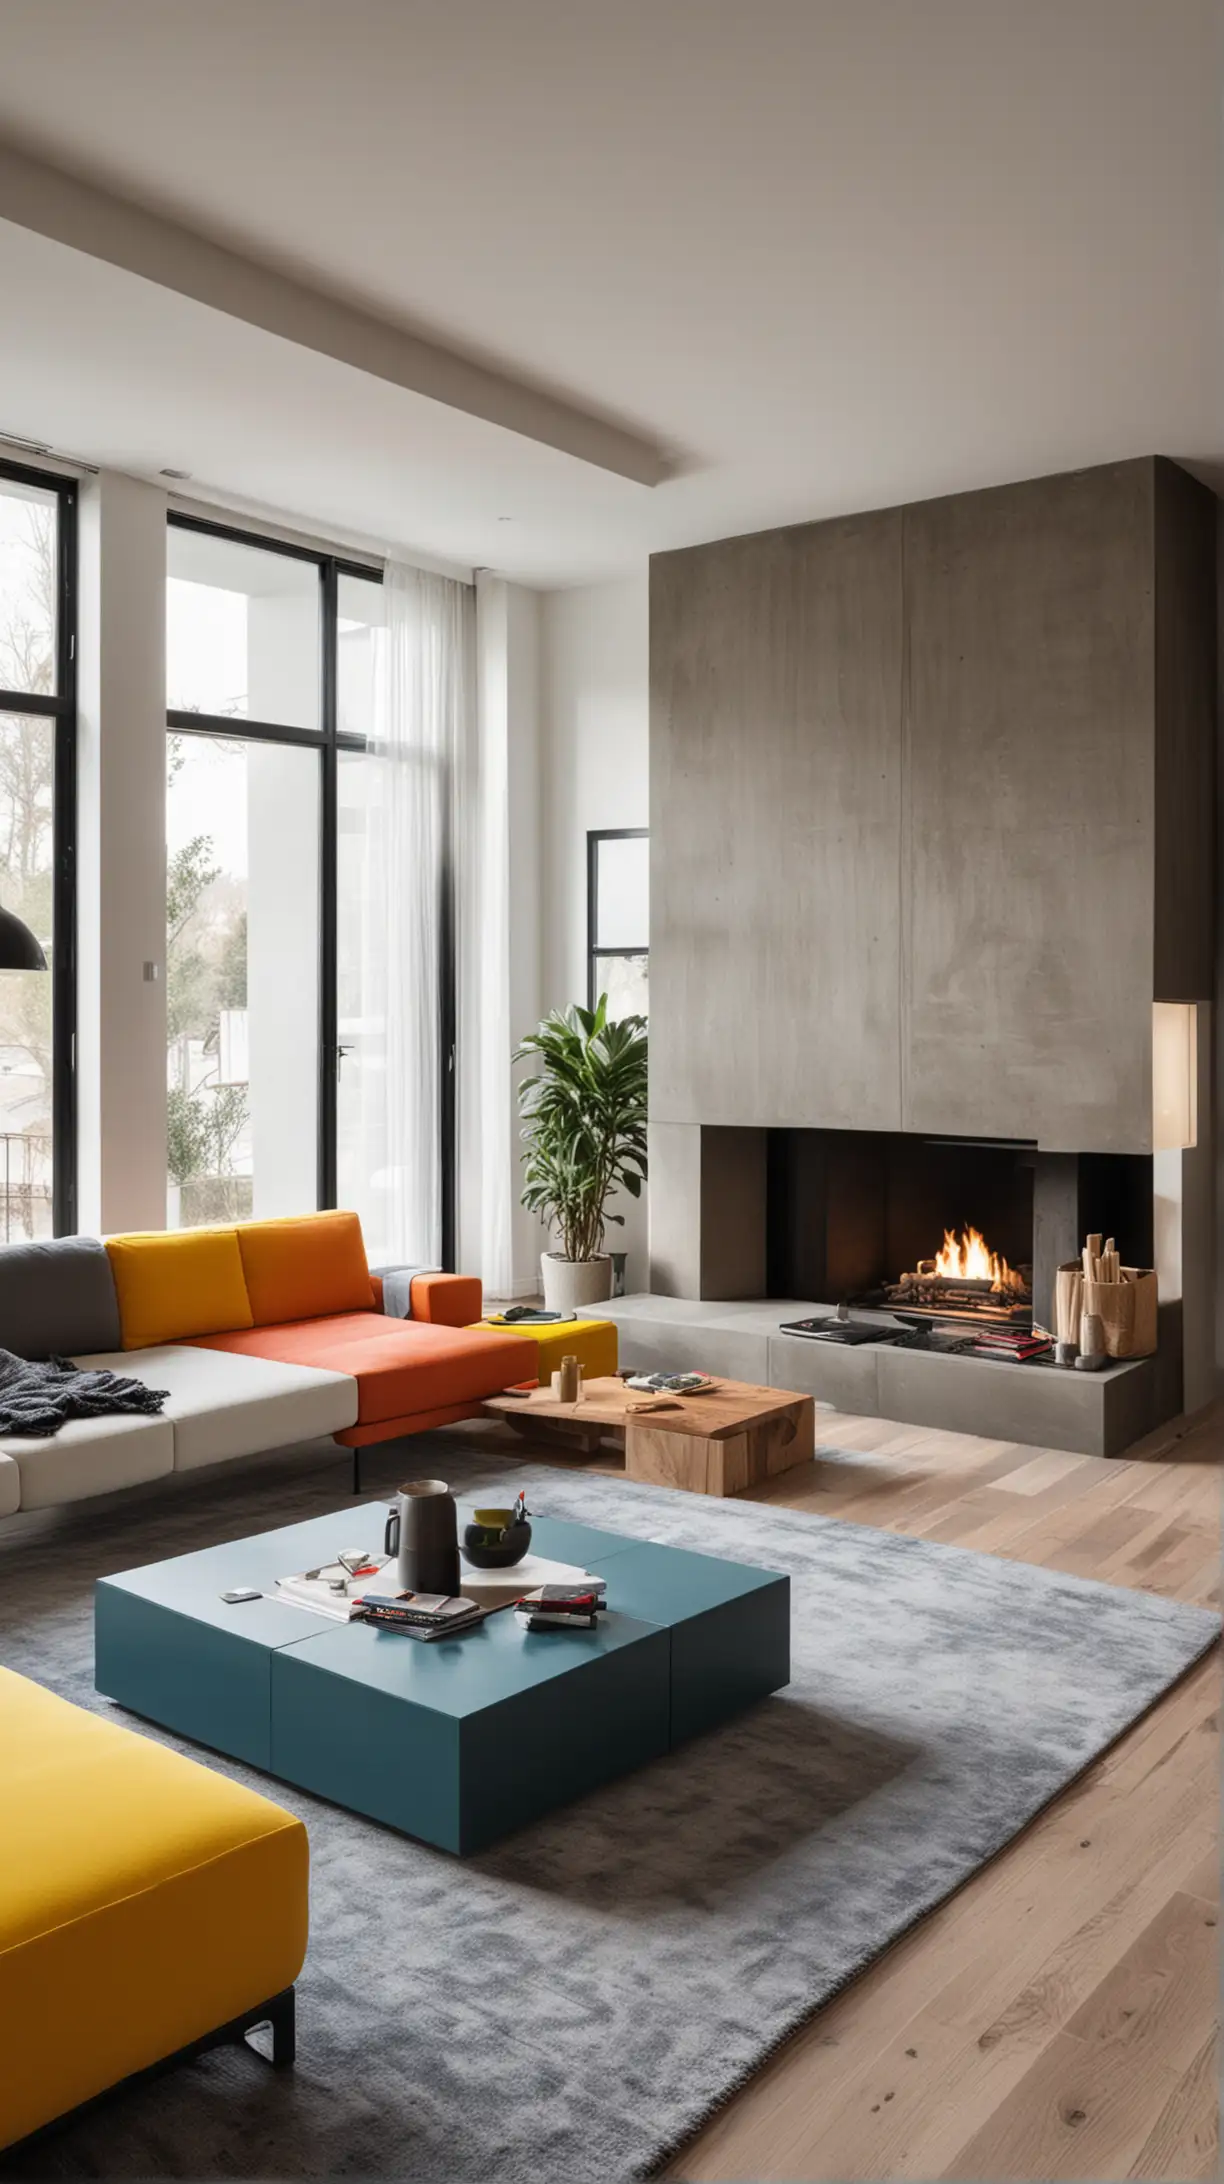 Sleek UltraModern Designer Living Room with Color Blocking